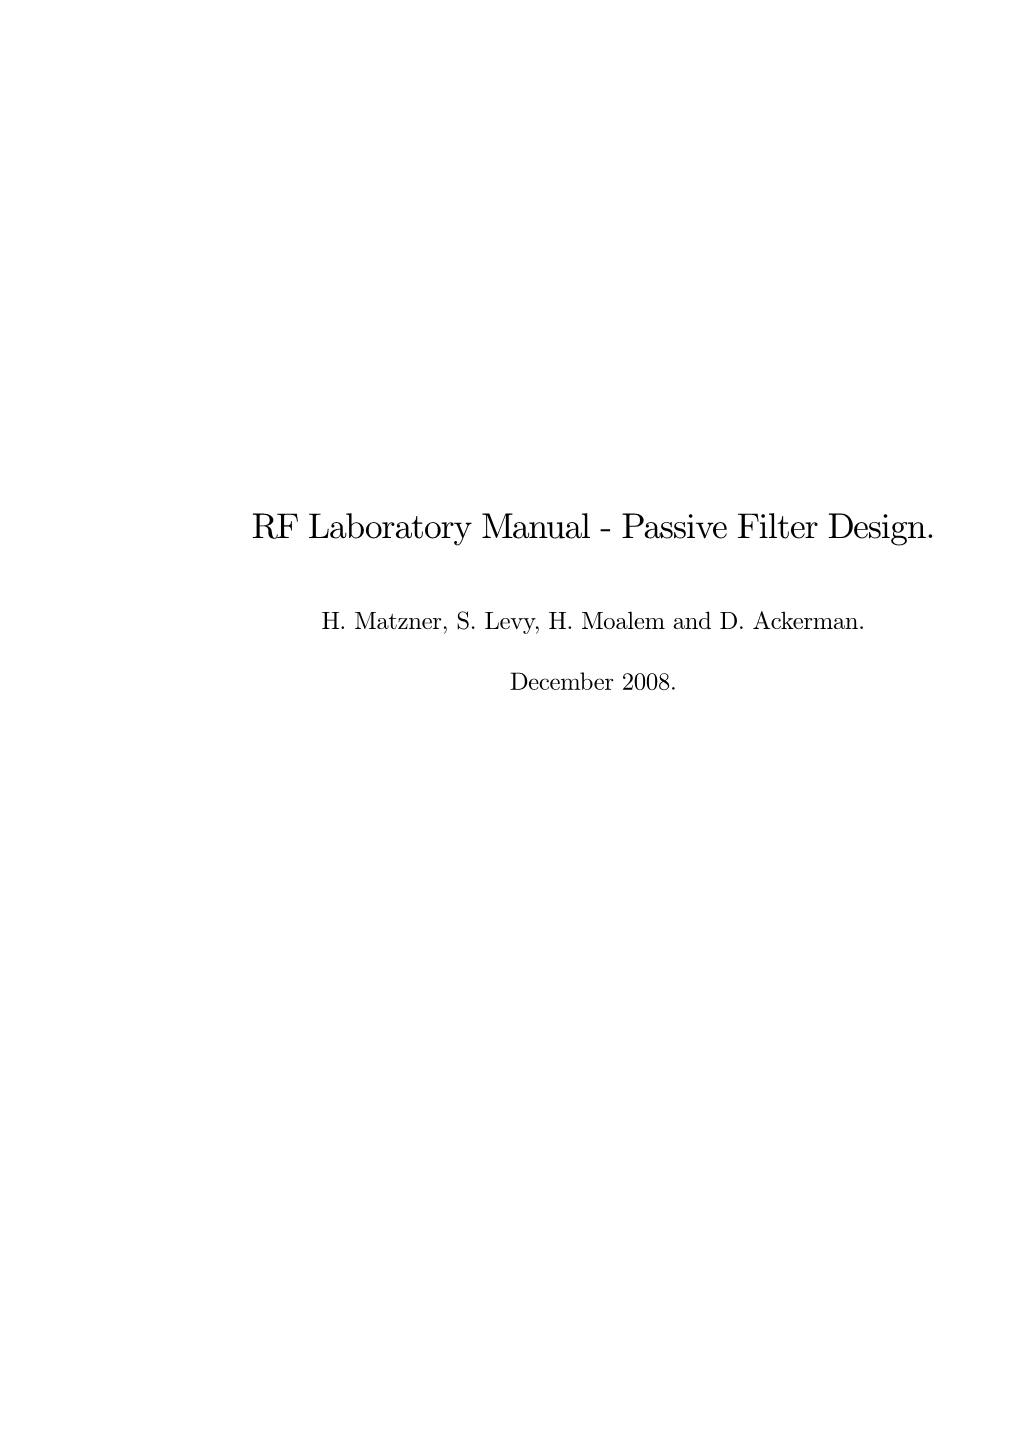 RF Laboratory Manual - Passive Filter Design